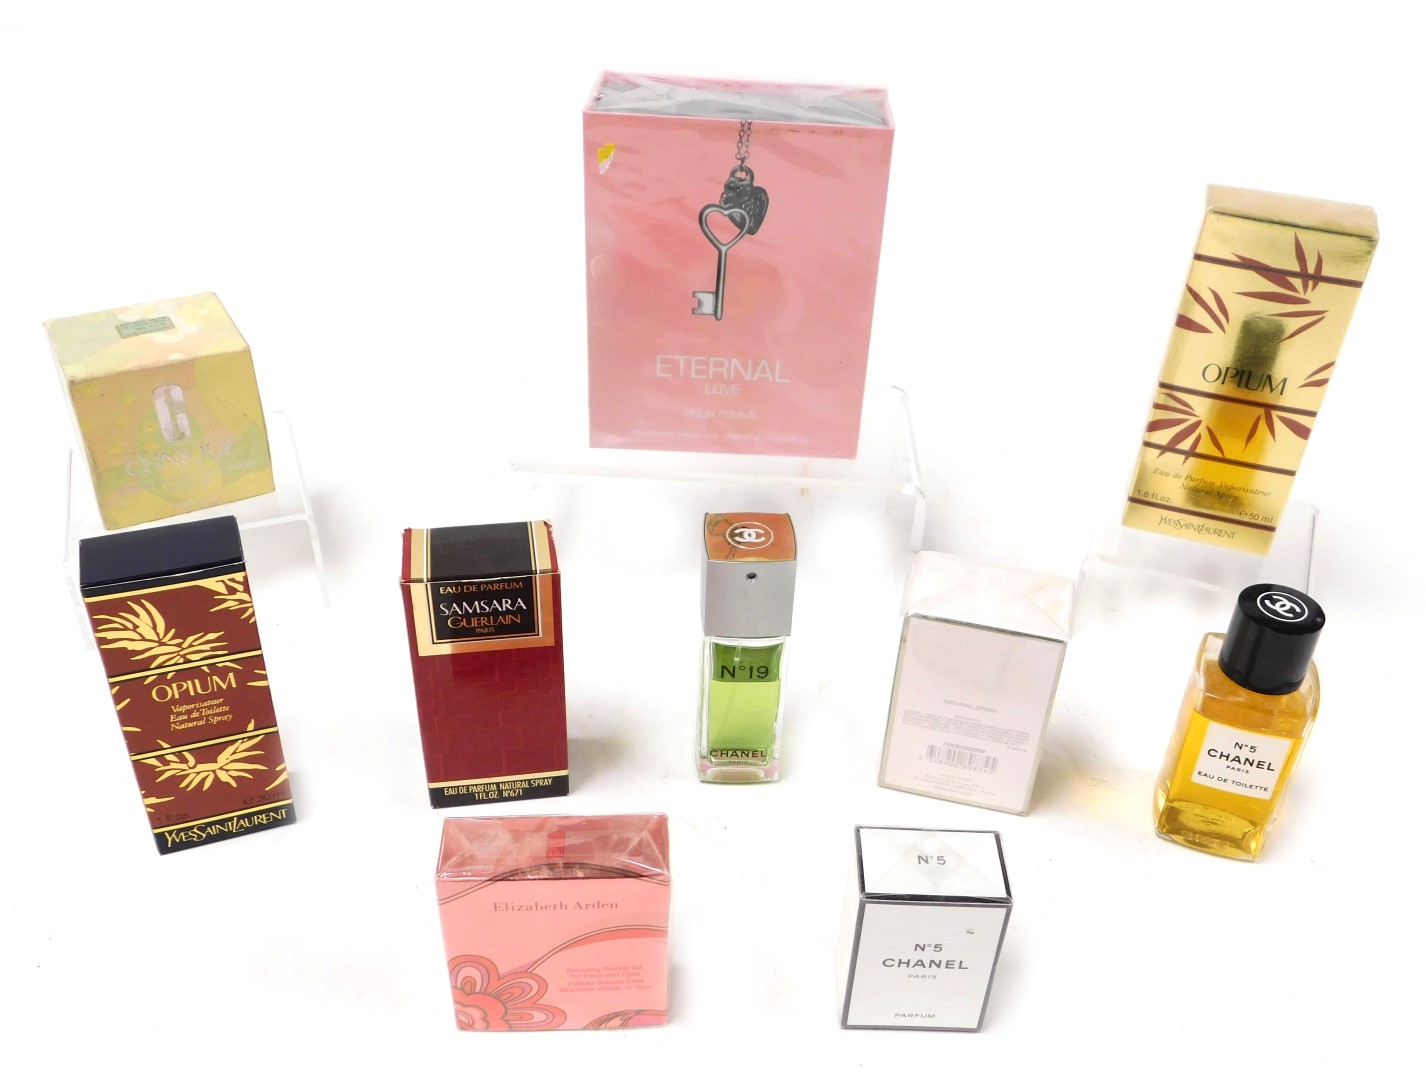 Lady's perfumes and eau de toilettes, including Chanel No.5, No.19, Eternal Love, Guerlain Samsara,